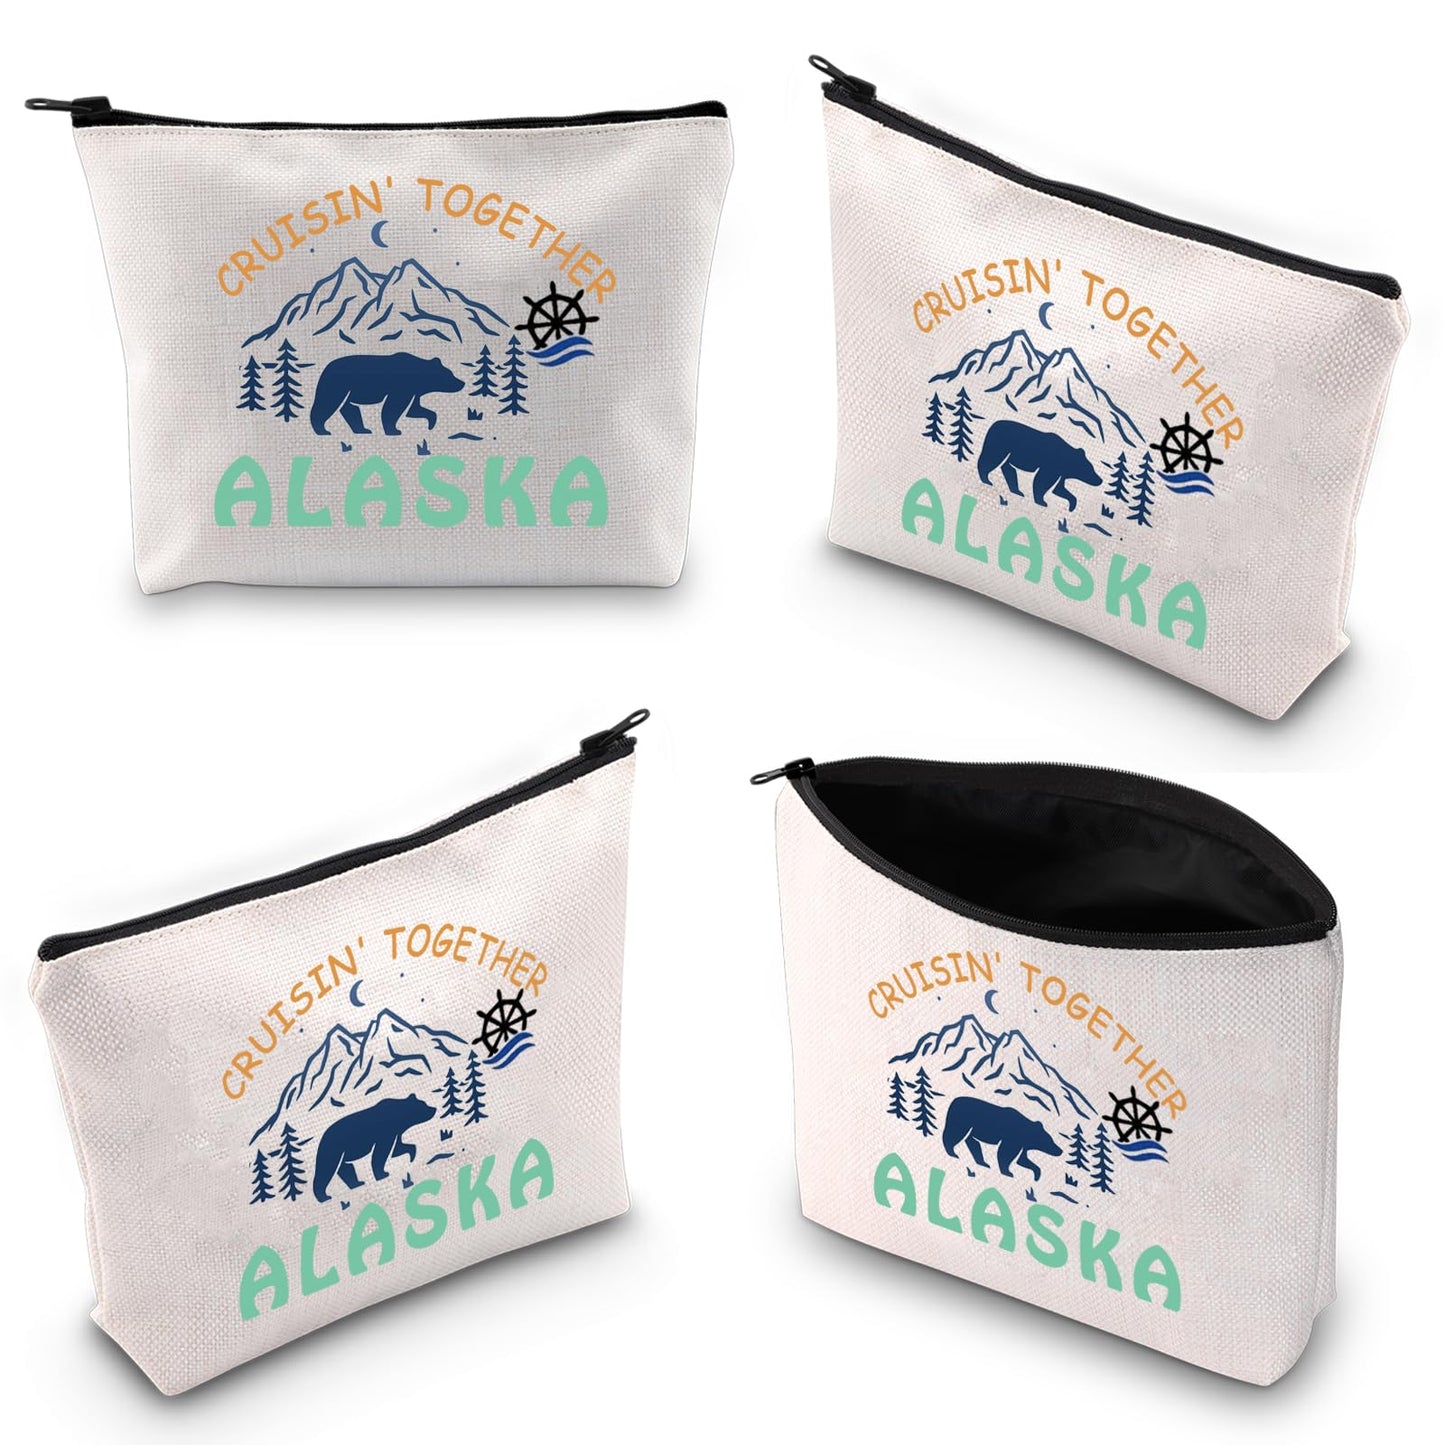 XYANFA Cruising Together Alaska Cruise Makeup Bag Alaska Family Trip Gift Cruise Vacation Gift Alaska Lover Gift Alaska Travel Cosmetic Bag Alaskan Cruise Gifts Travel Bag (CRUISIN' TOGETHER ALASKA)